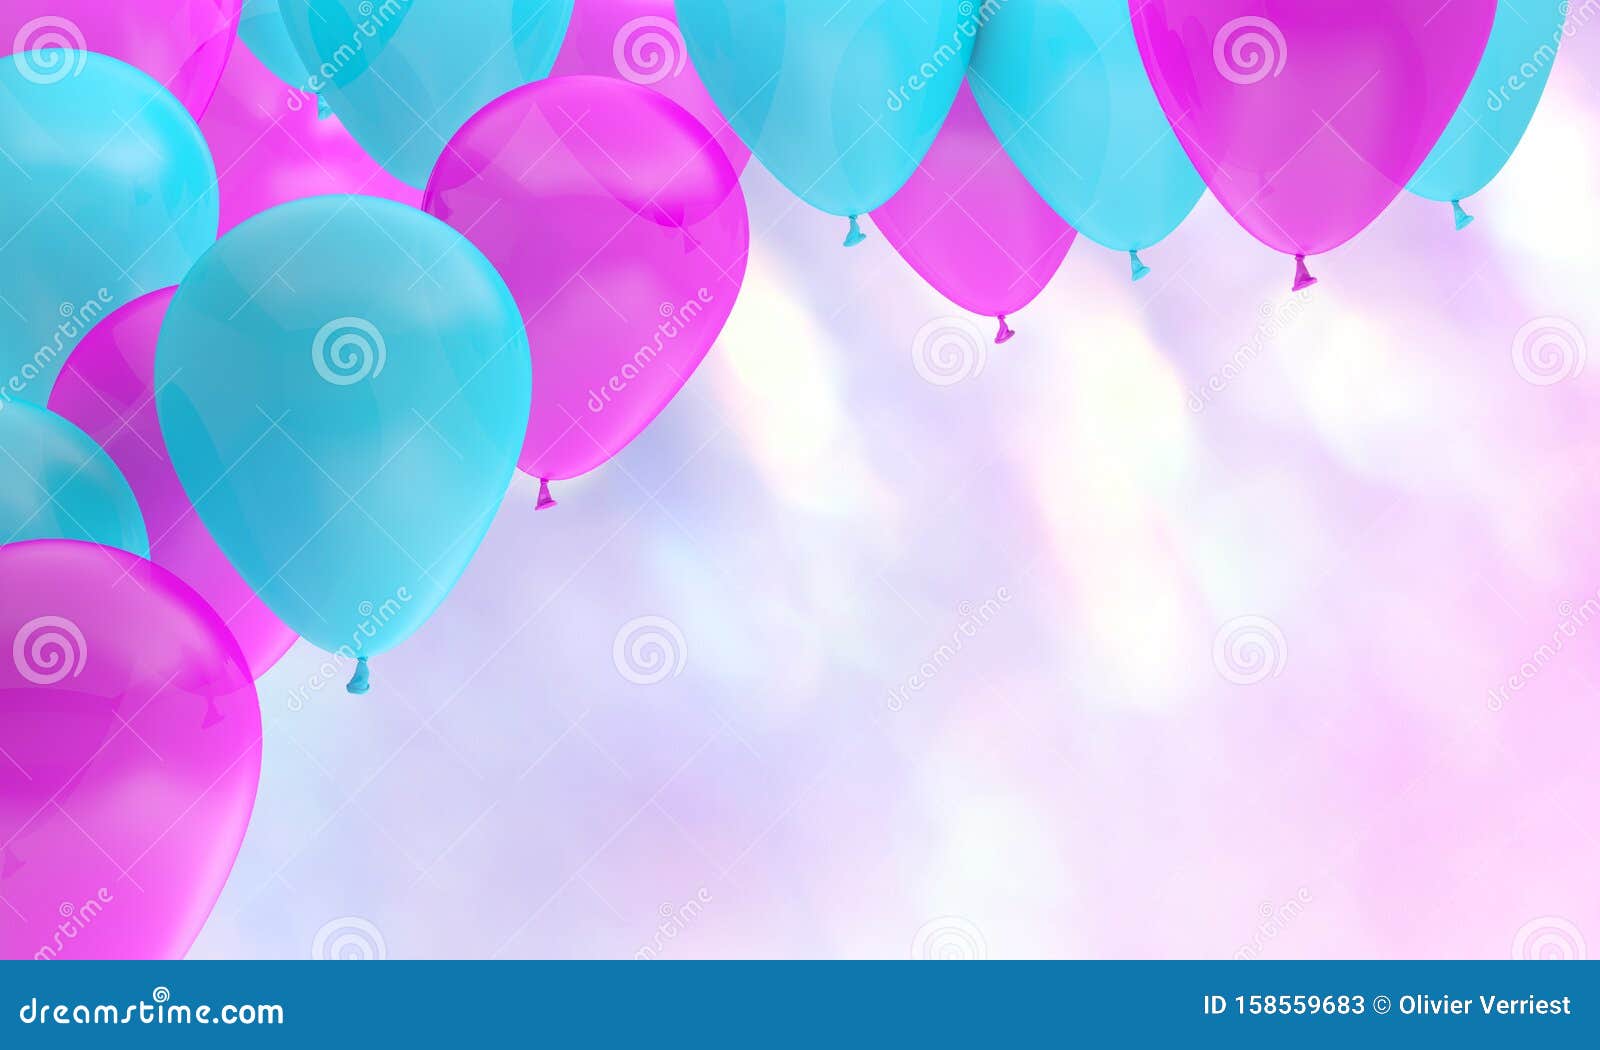 Balloon Purple Blue Birthday Background Party Stock Image - Image ...